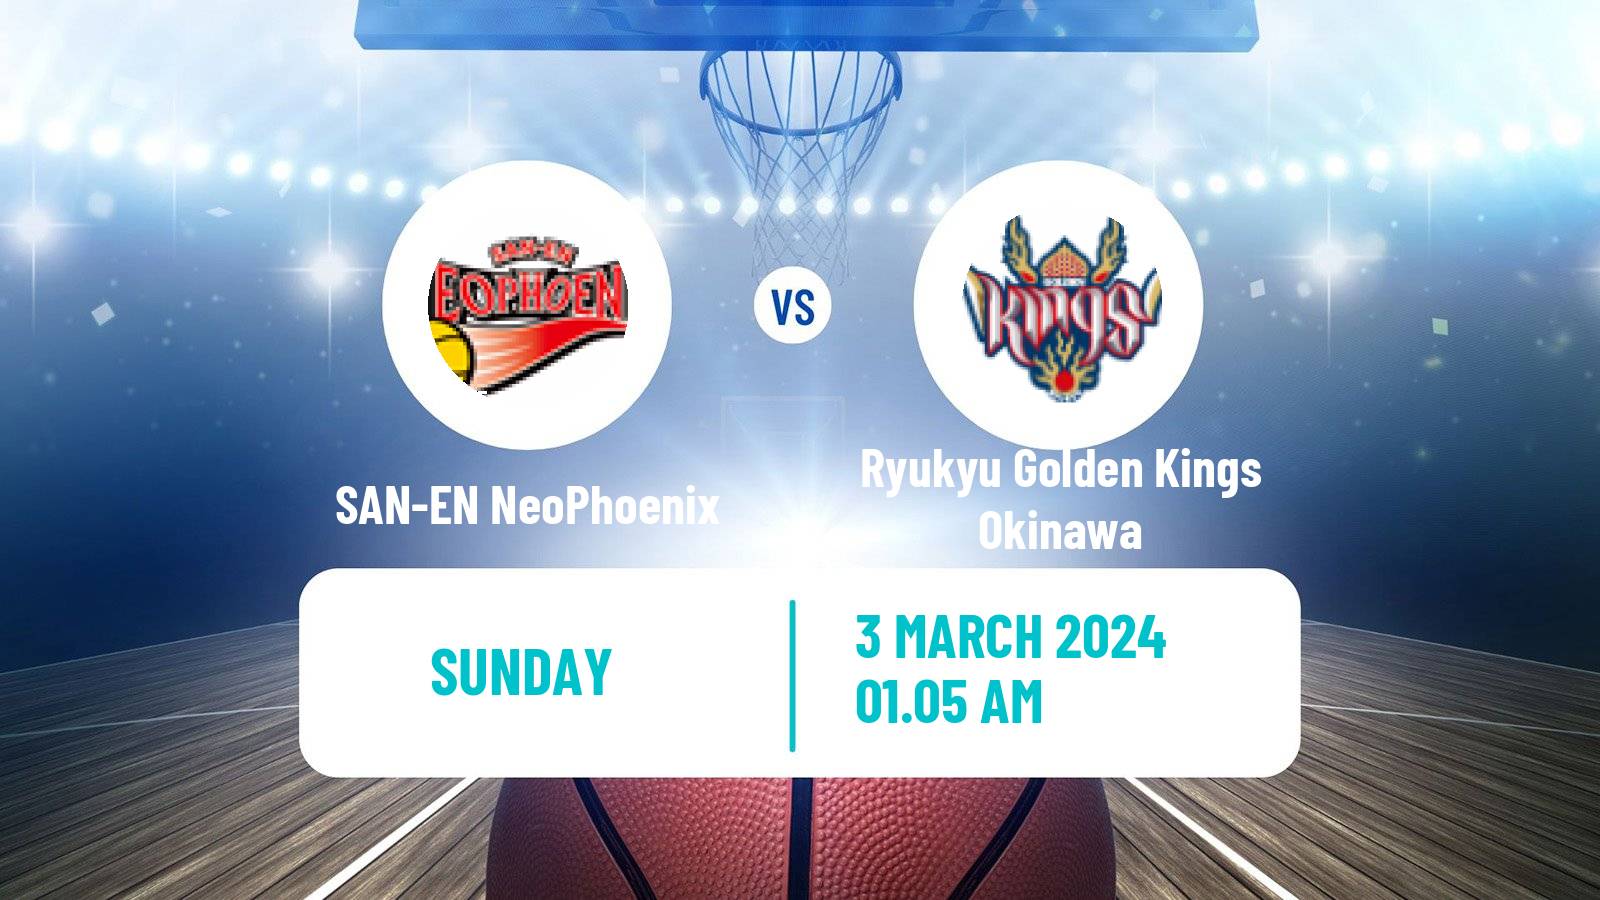 Basketball BJ League SAN-EN NeoPhoenix - Ryukyu Golden Kings Okinawa